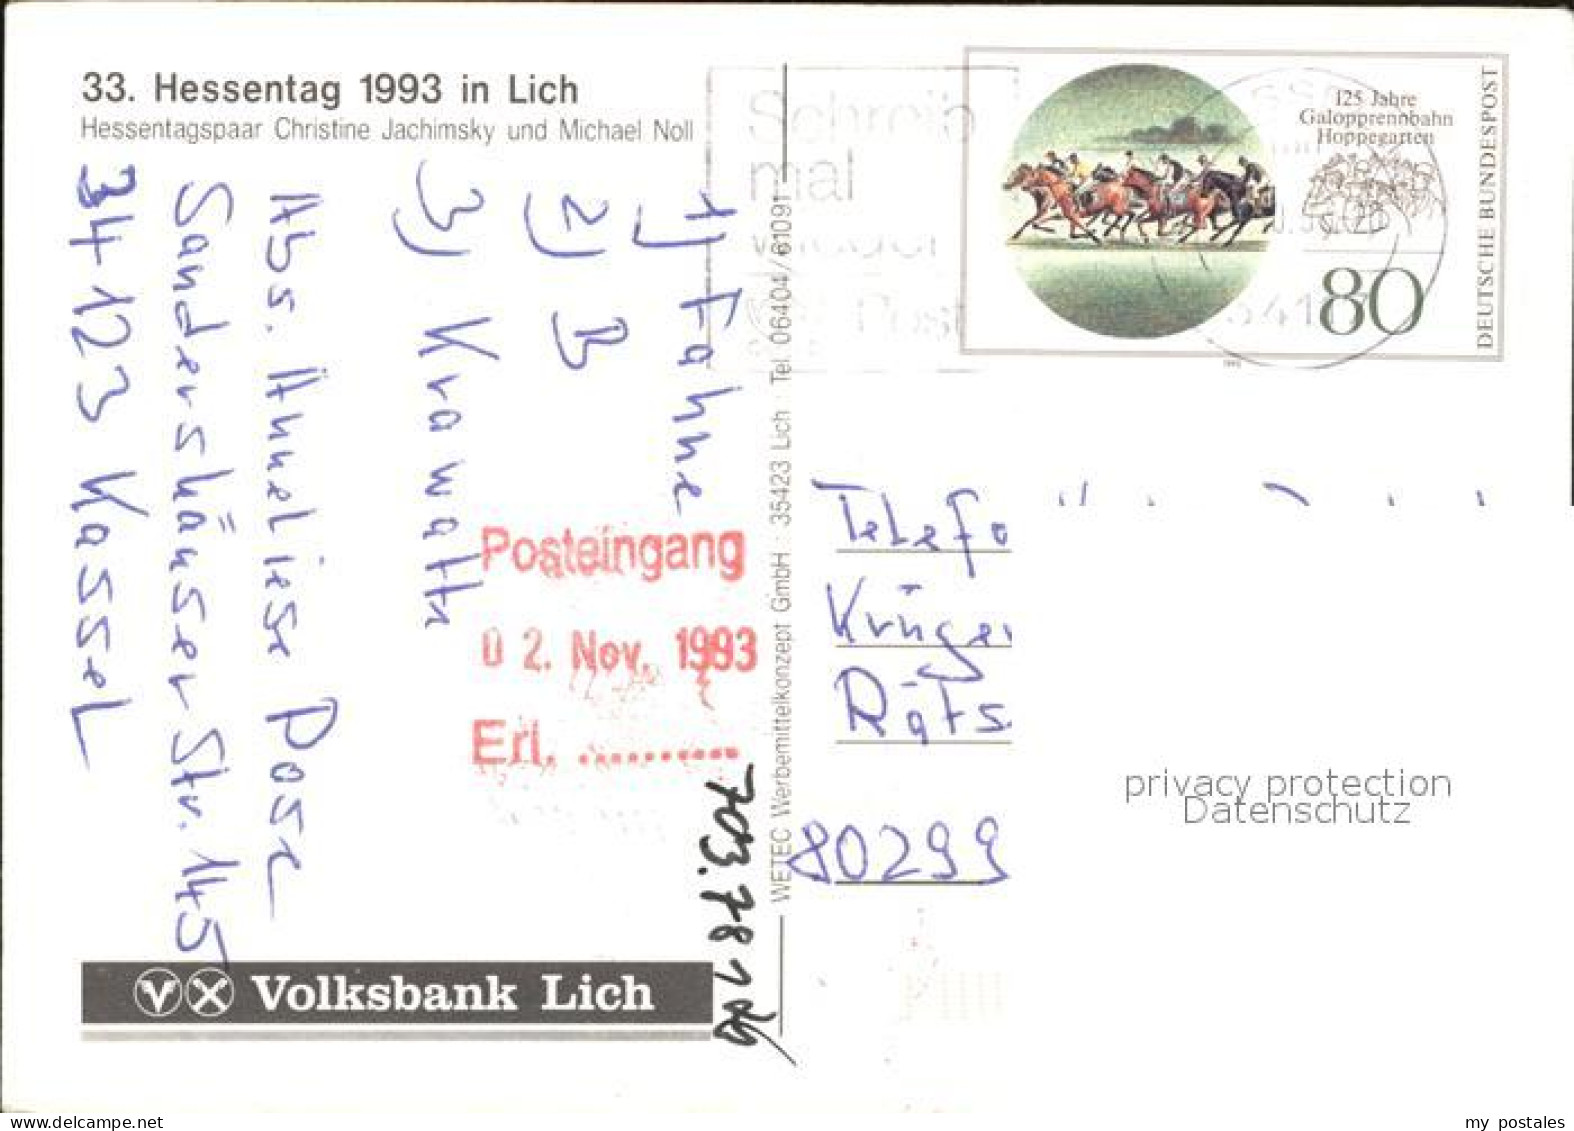 72573522 Lich Hessen Hessentagspaar Christine Jachimsky Michael Noll Lich - Lich